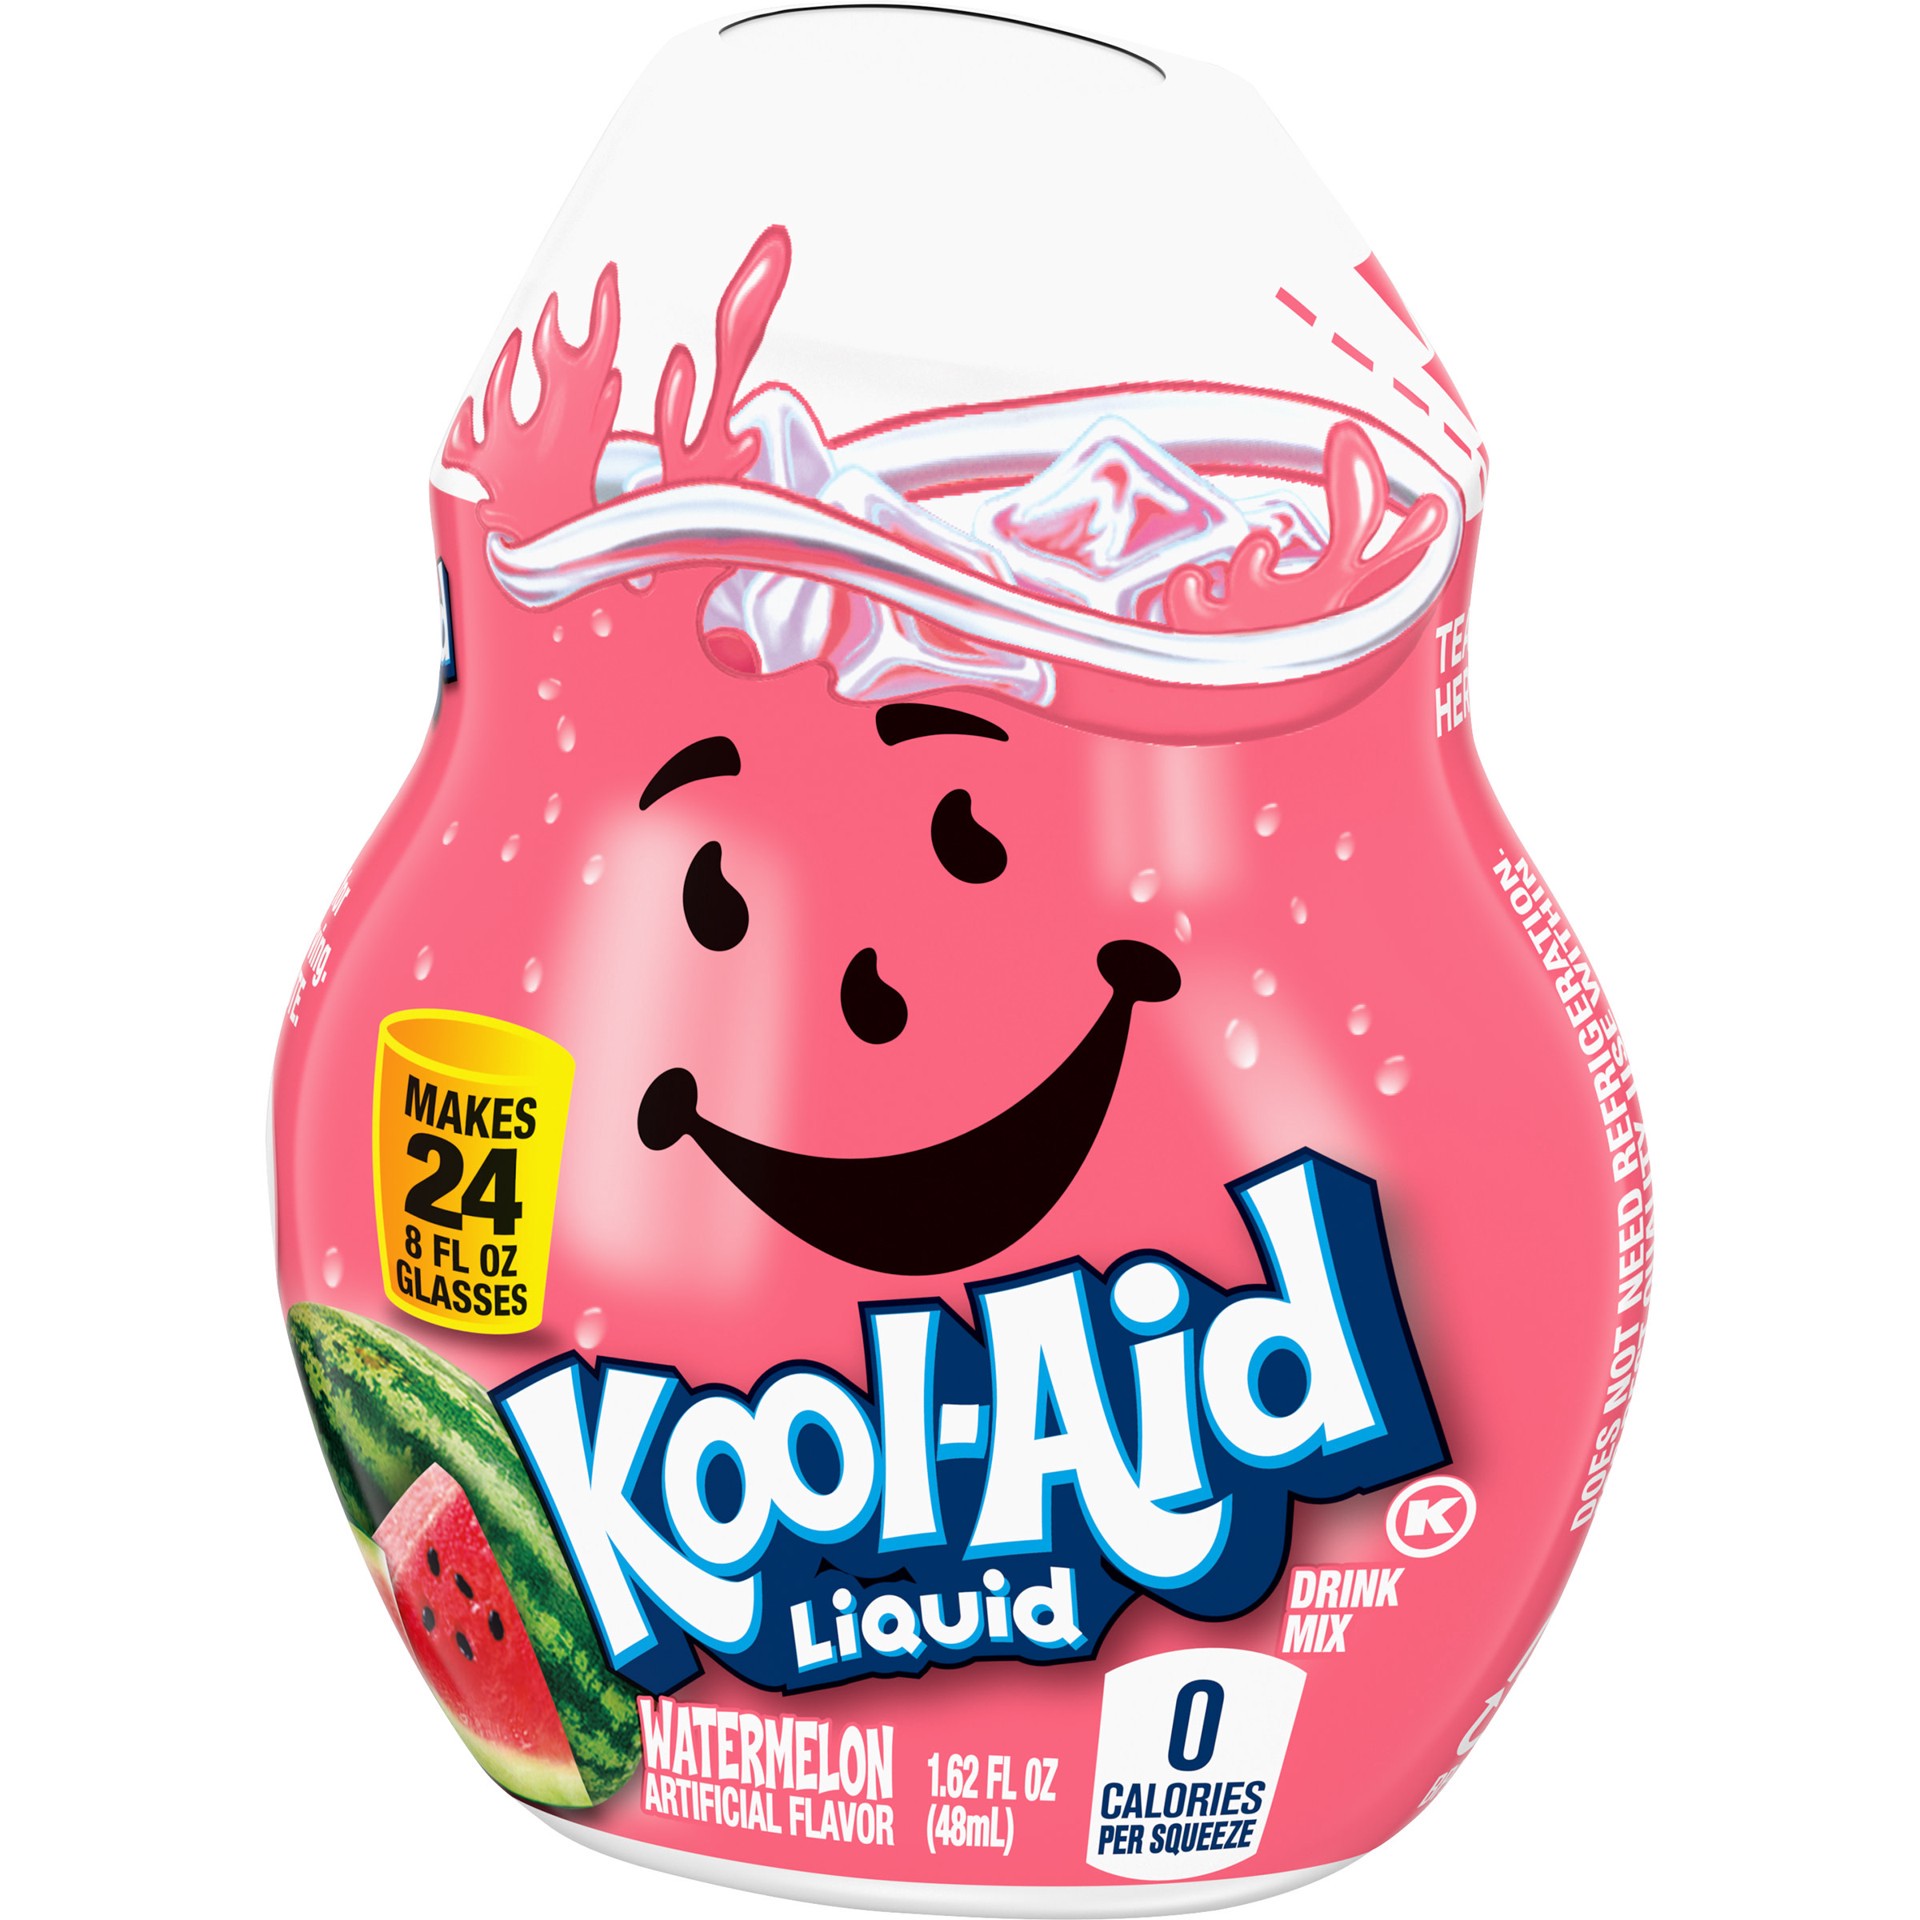 slide 3 of 5, Kool-Aid Liquid Watermelon Artificially Flavored Soft Drink Mix Bottle, 1.62 fl oz